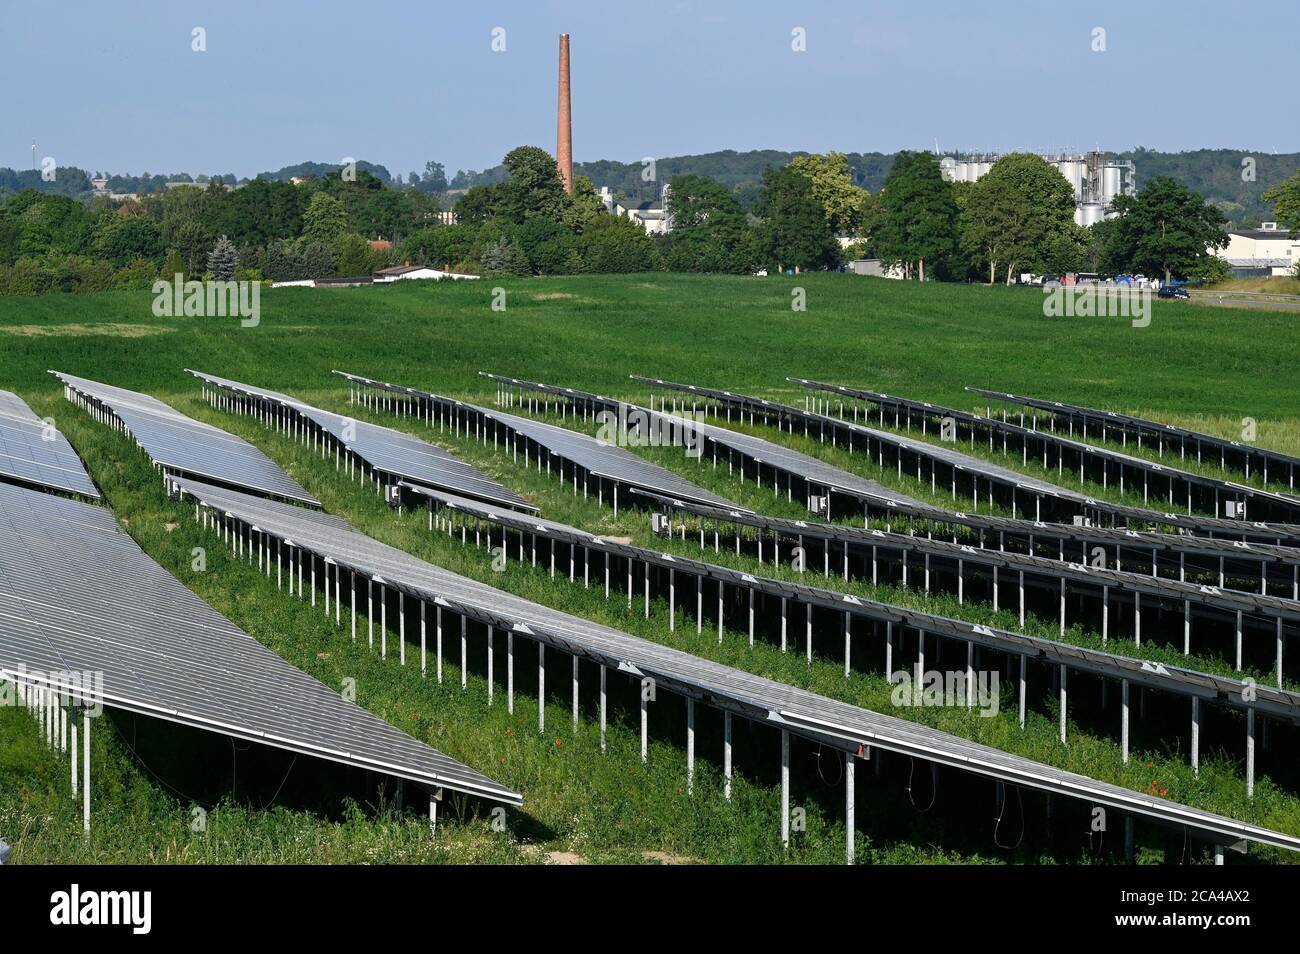 DEUTSCHLAND, Lübz, Solarpark / DEUTSCHLAND, Lübz, Solarfeld Stockfoto